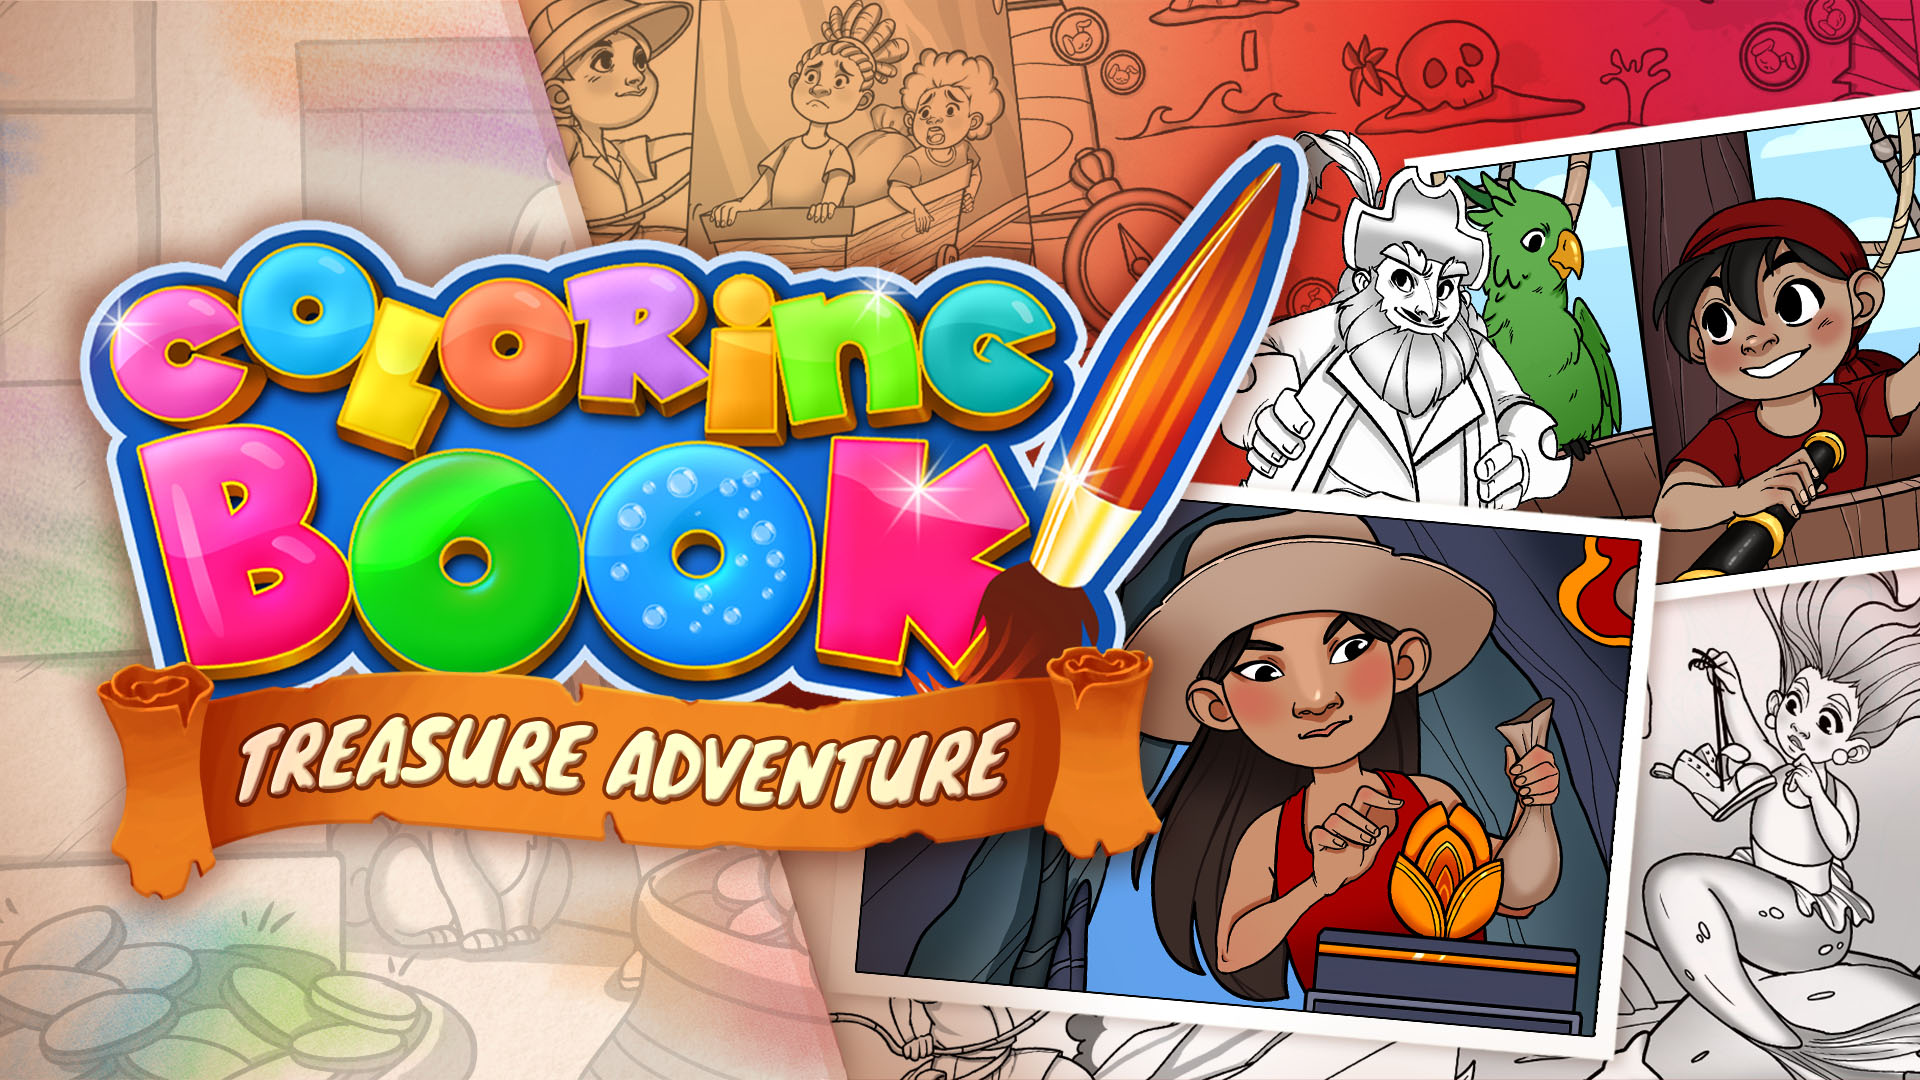 Coloring Book: Treasure Adventure